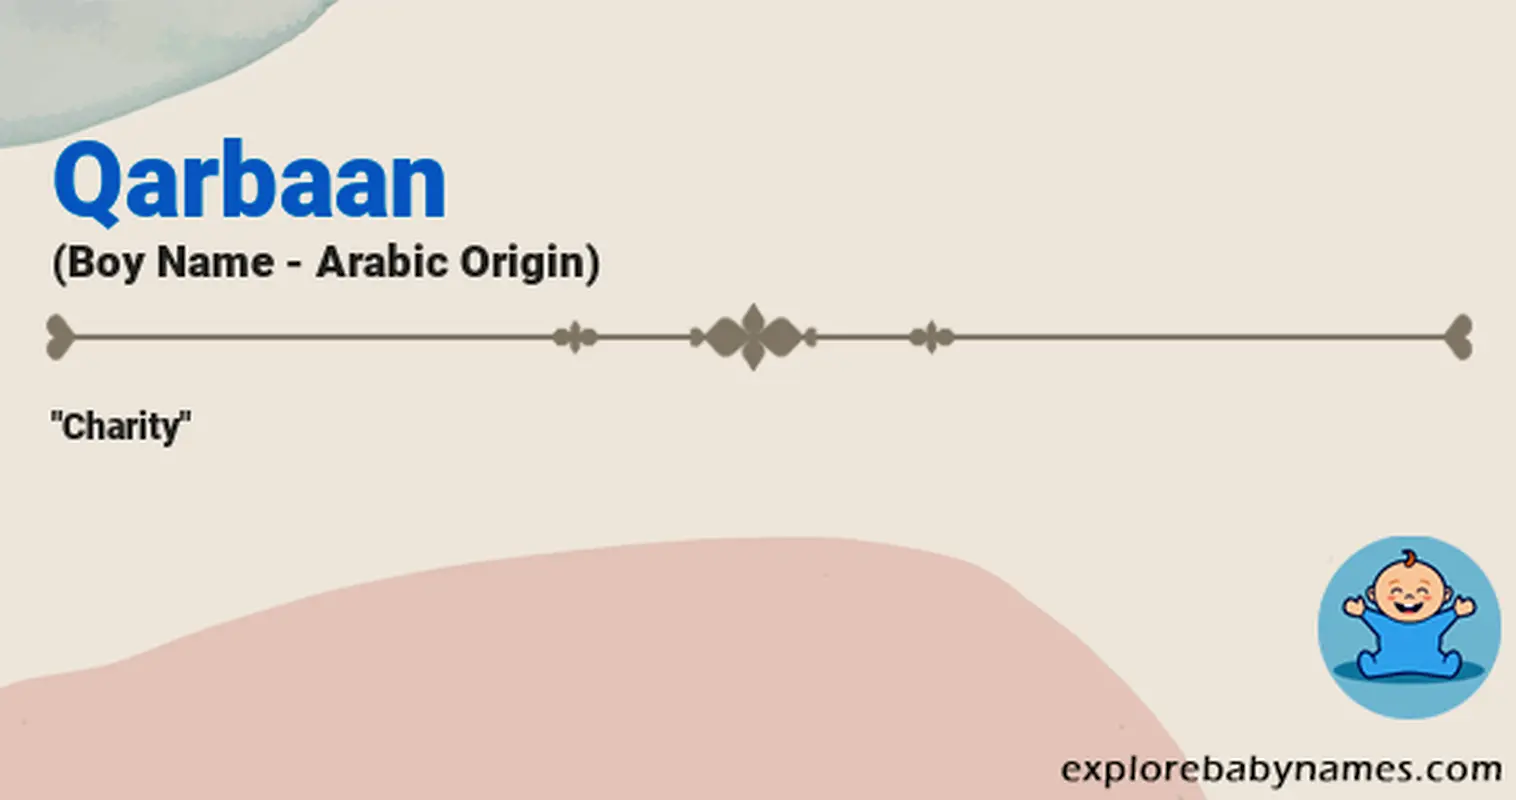 Meaning of Qarbaan